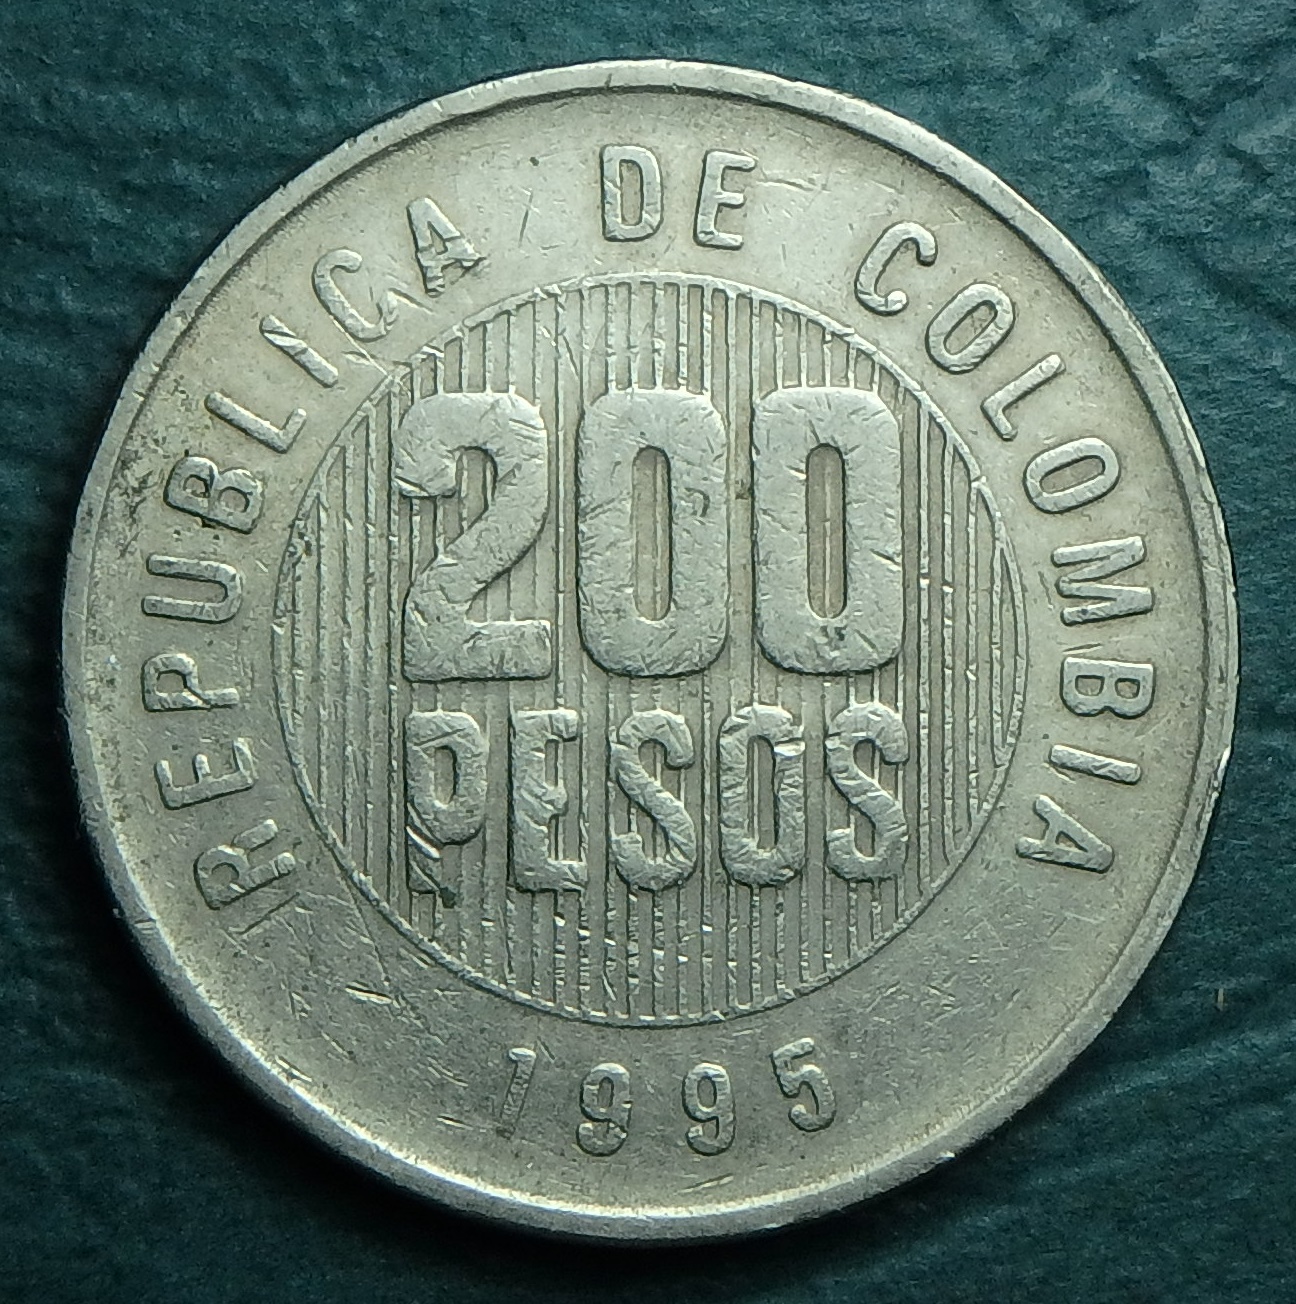 1995 CO 200 p obv.JPG